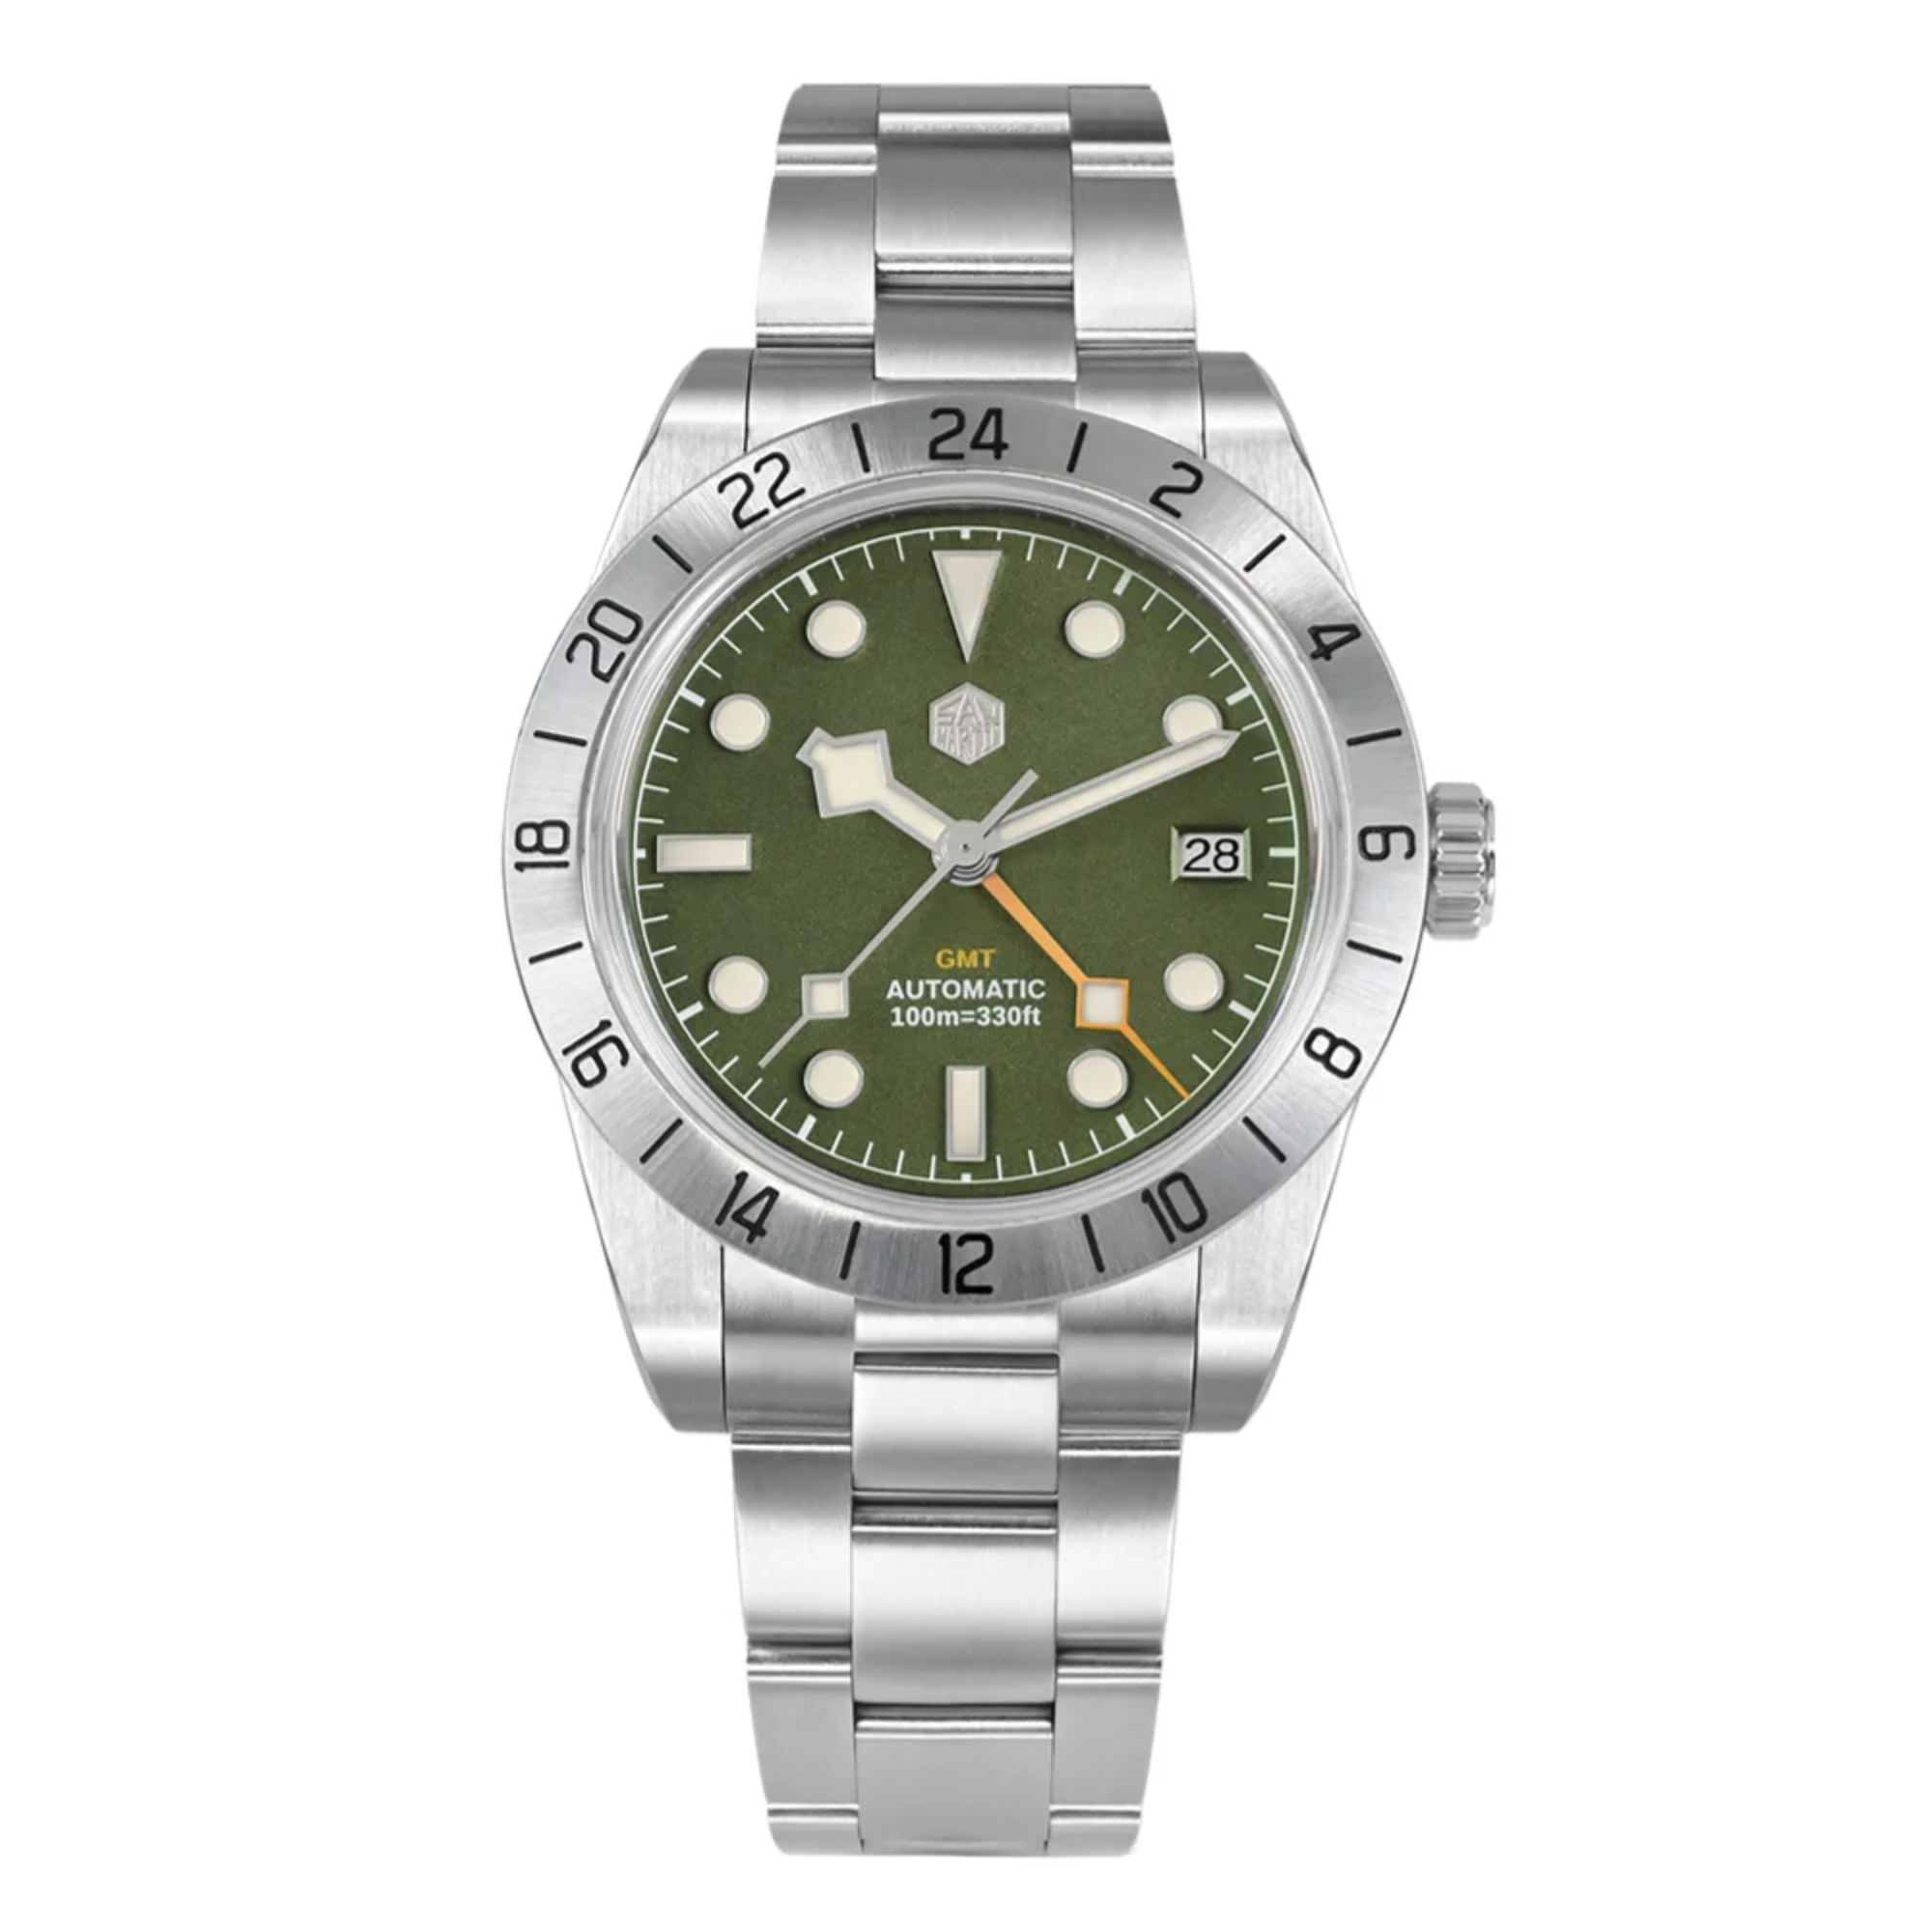 San Martin NH34 39mm BB GMT Watch SN054C - Green san martin watches india online